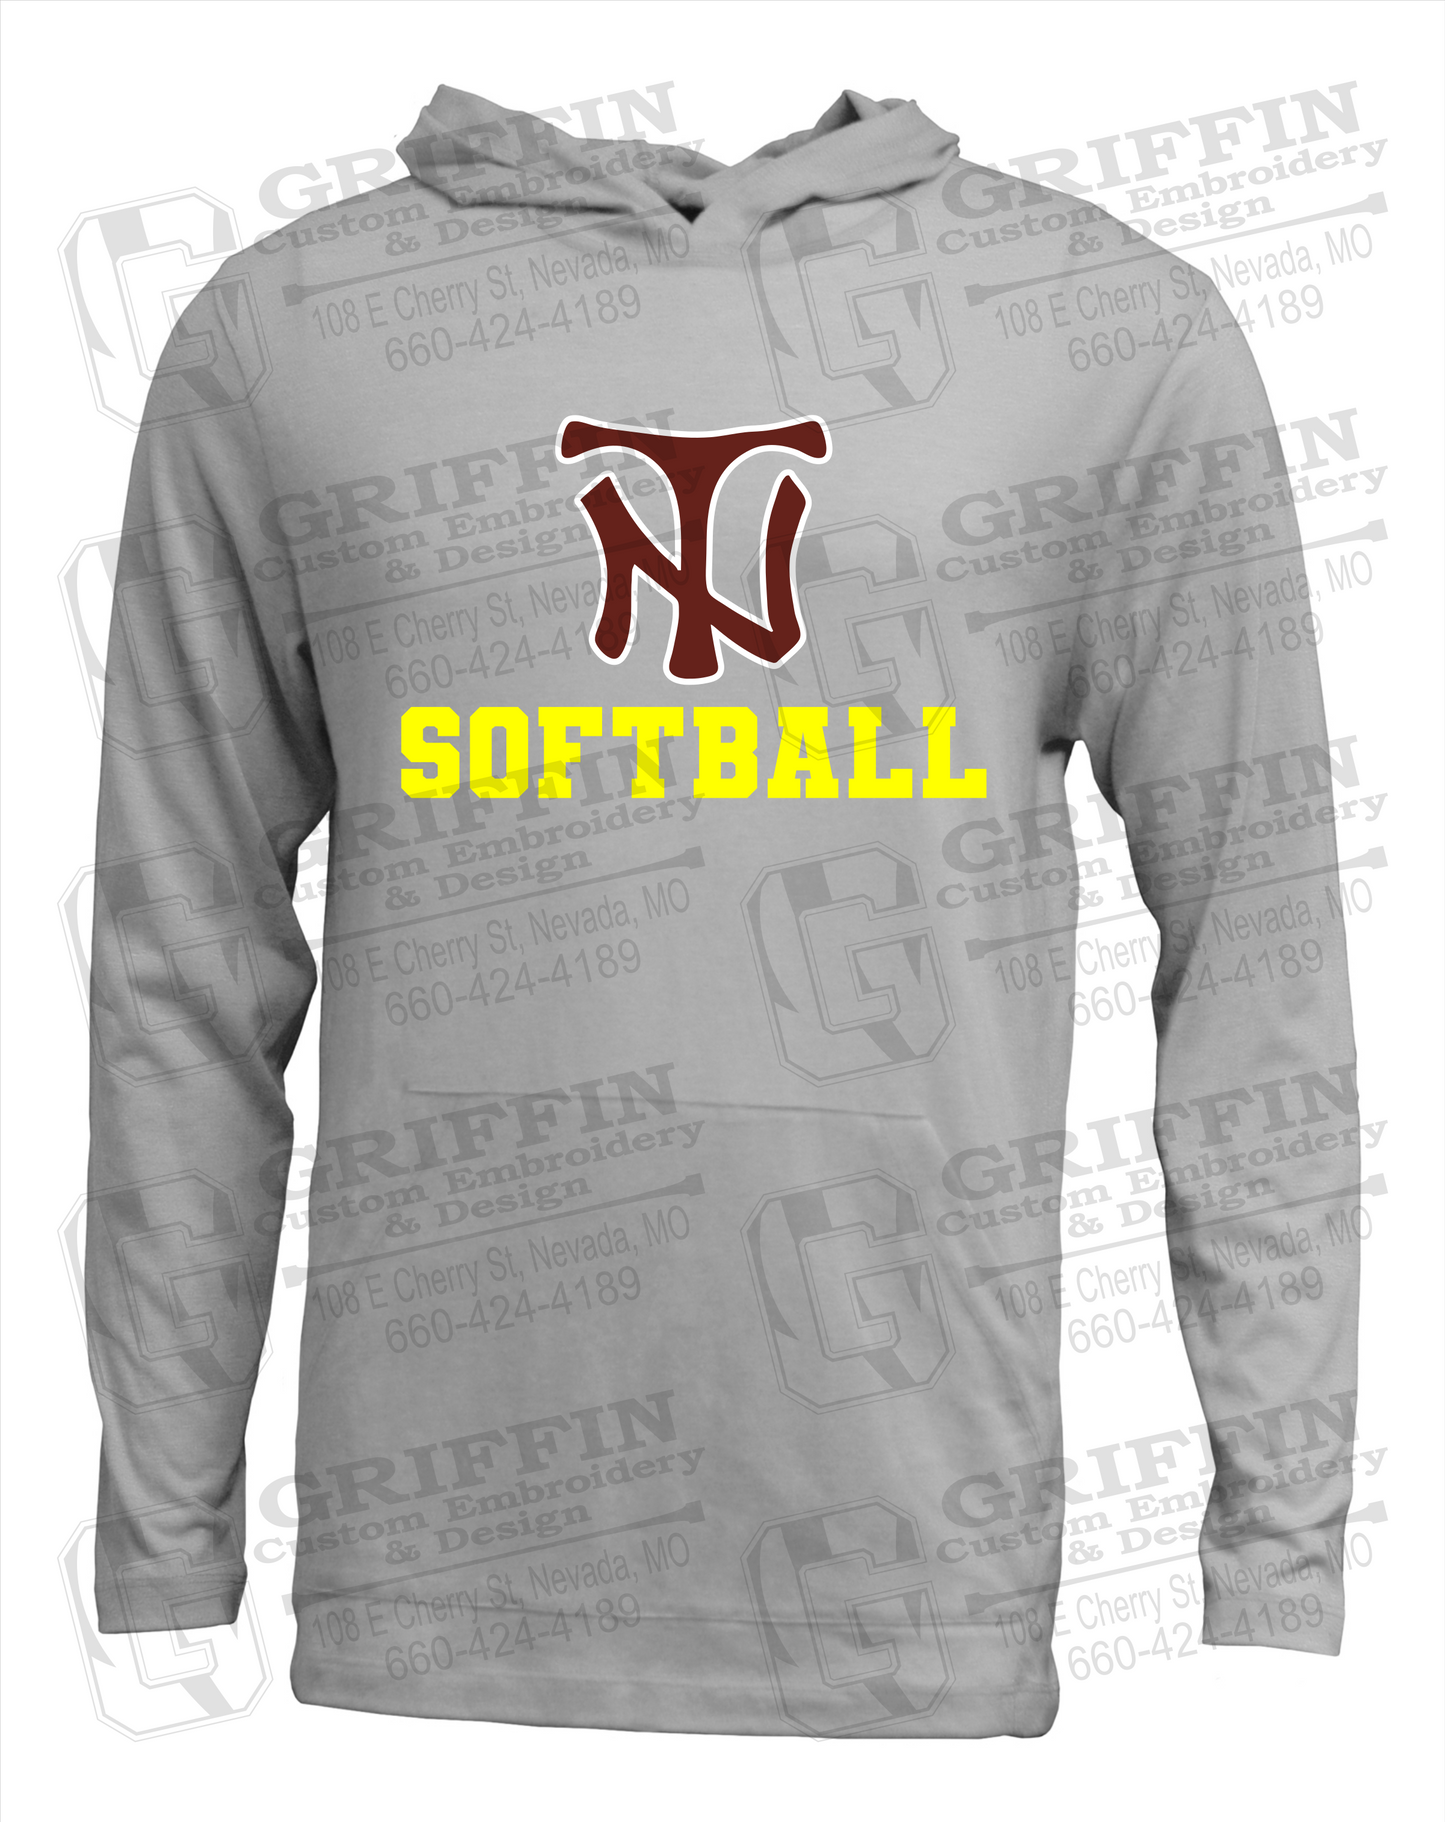 Soft-Tek T-Shirt Hoodie - Softball - Nevada Tigers 24-C